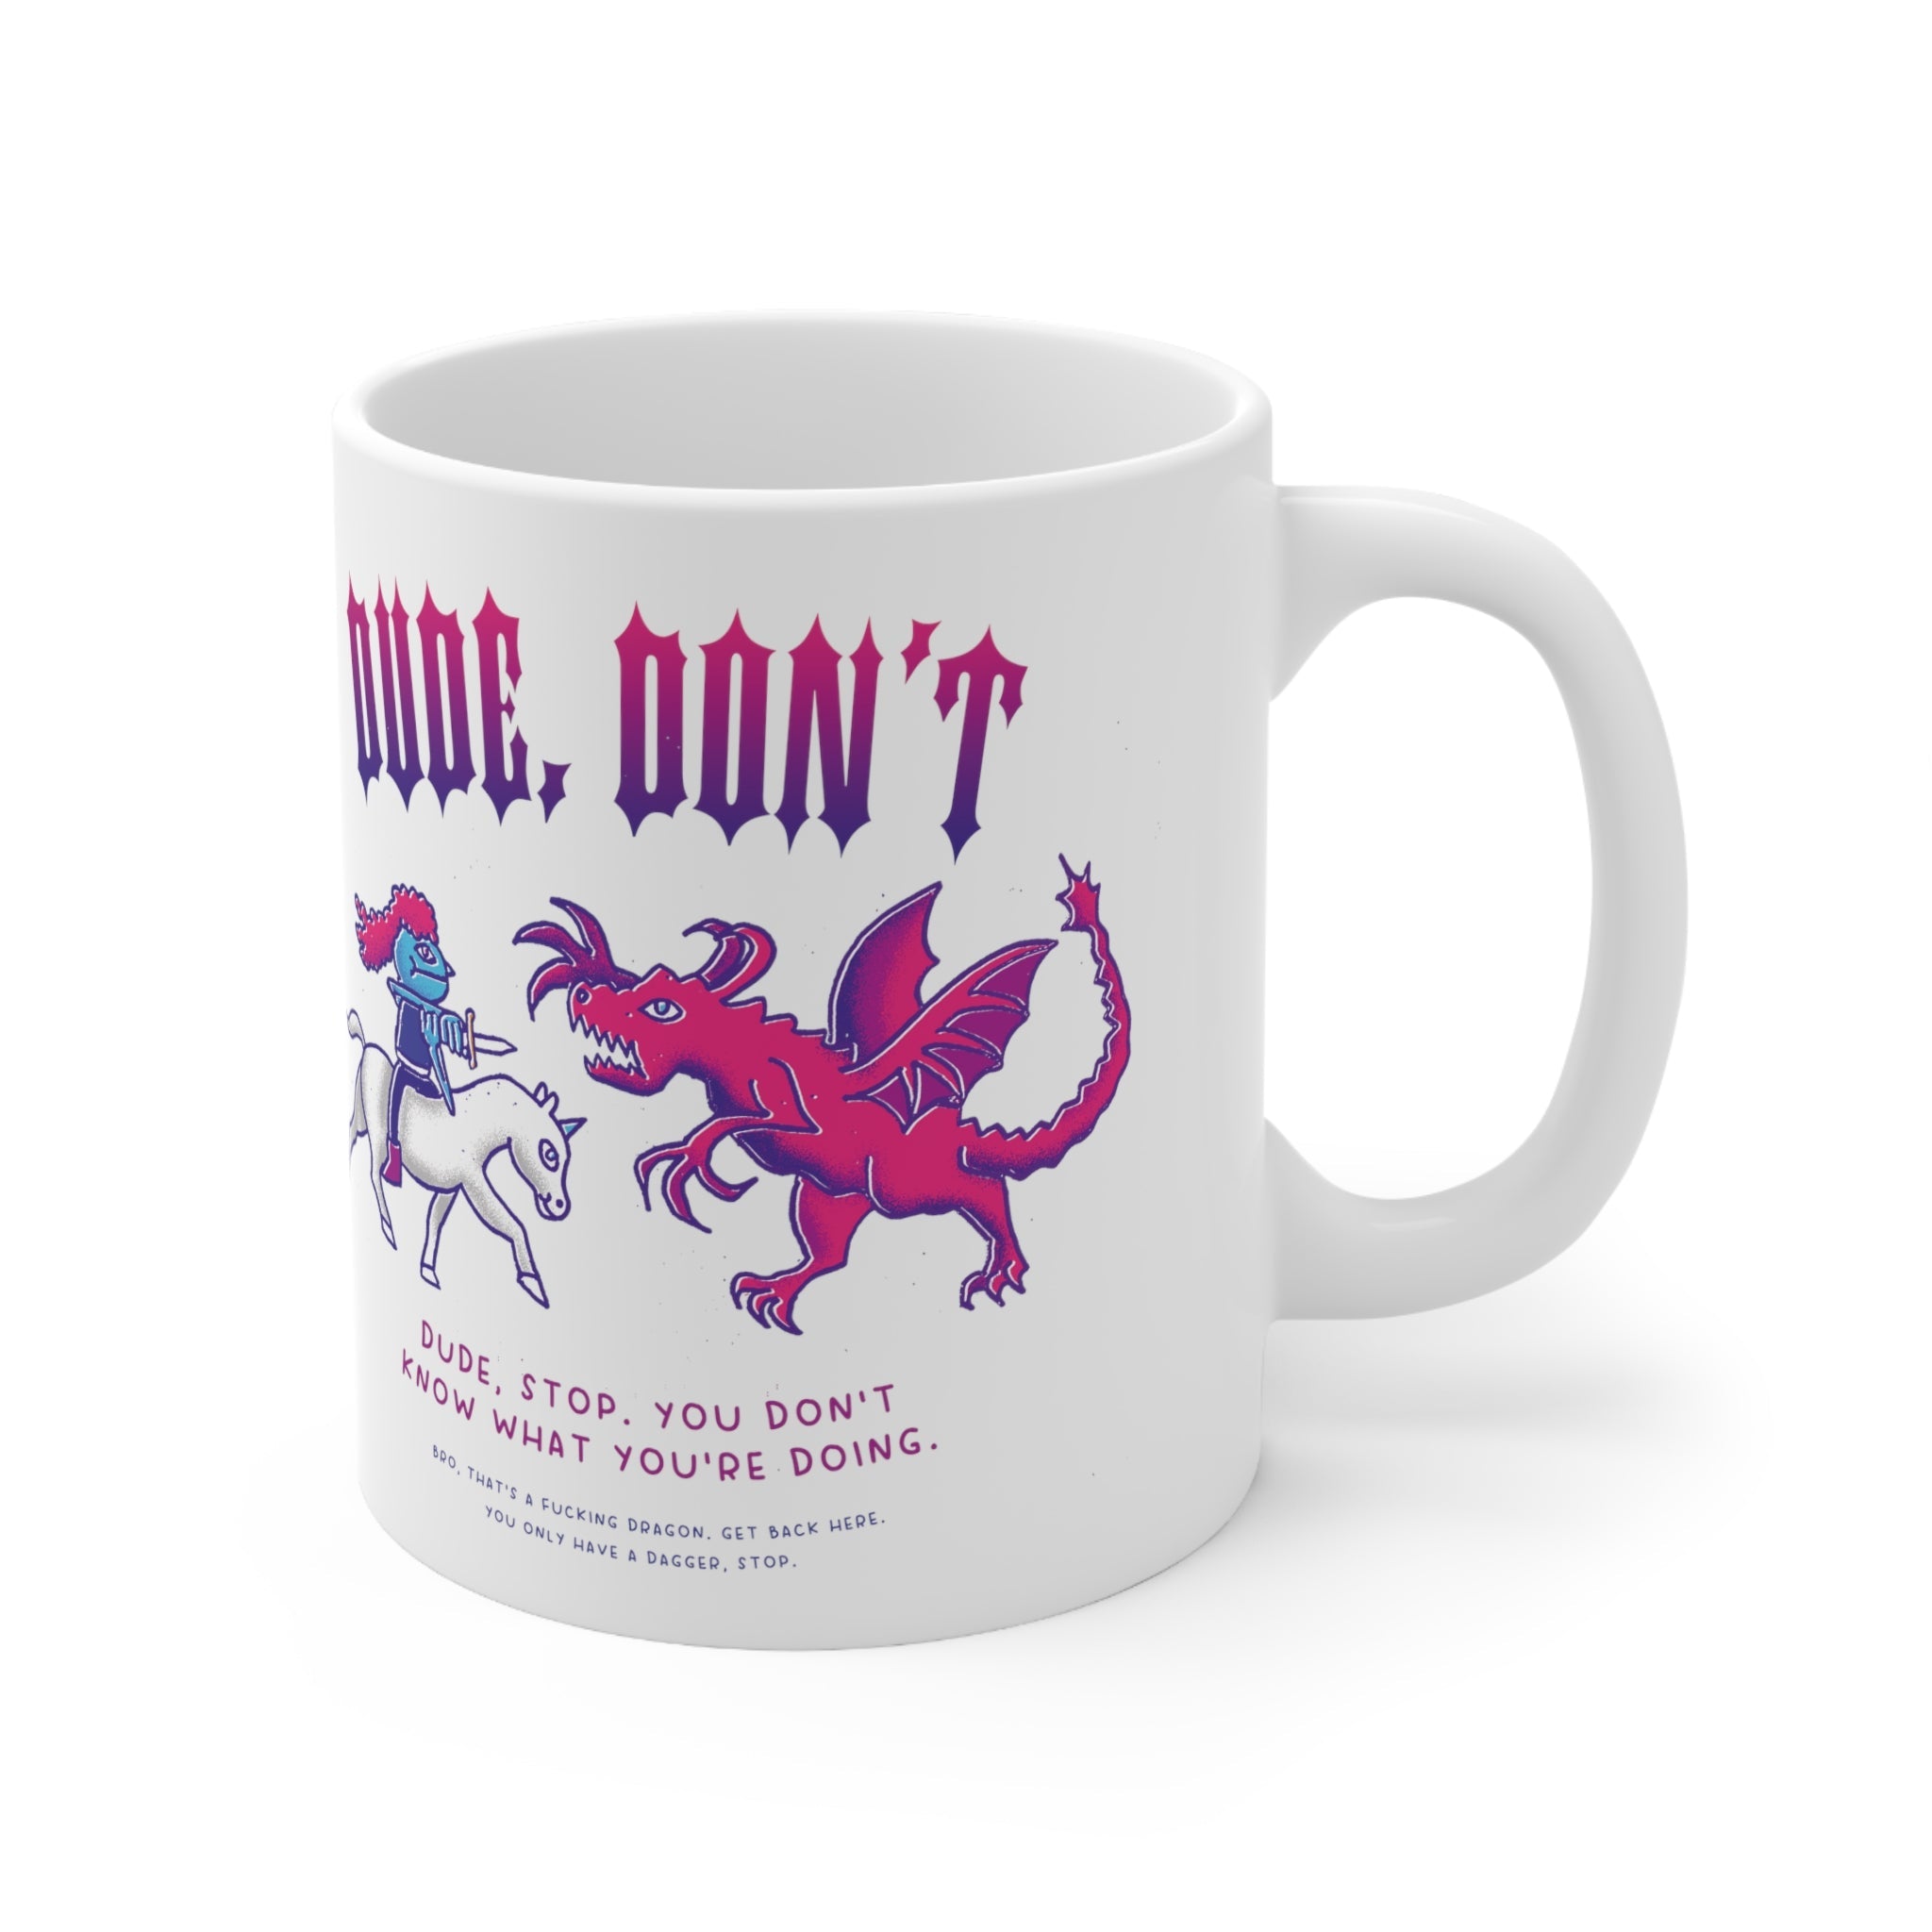 Dude, Don't | Ceramic Mug 11oz - Mug - Ace of Gnomes - 27828566442763119296